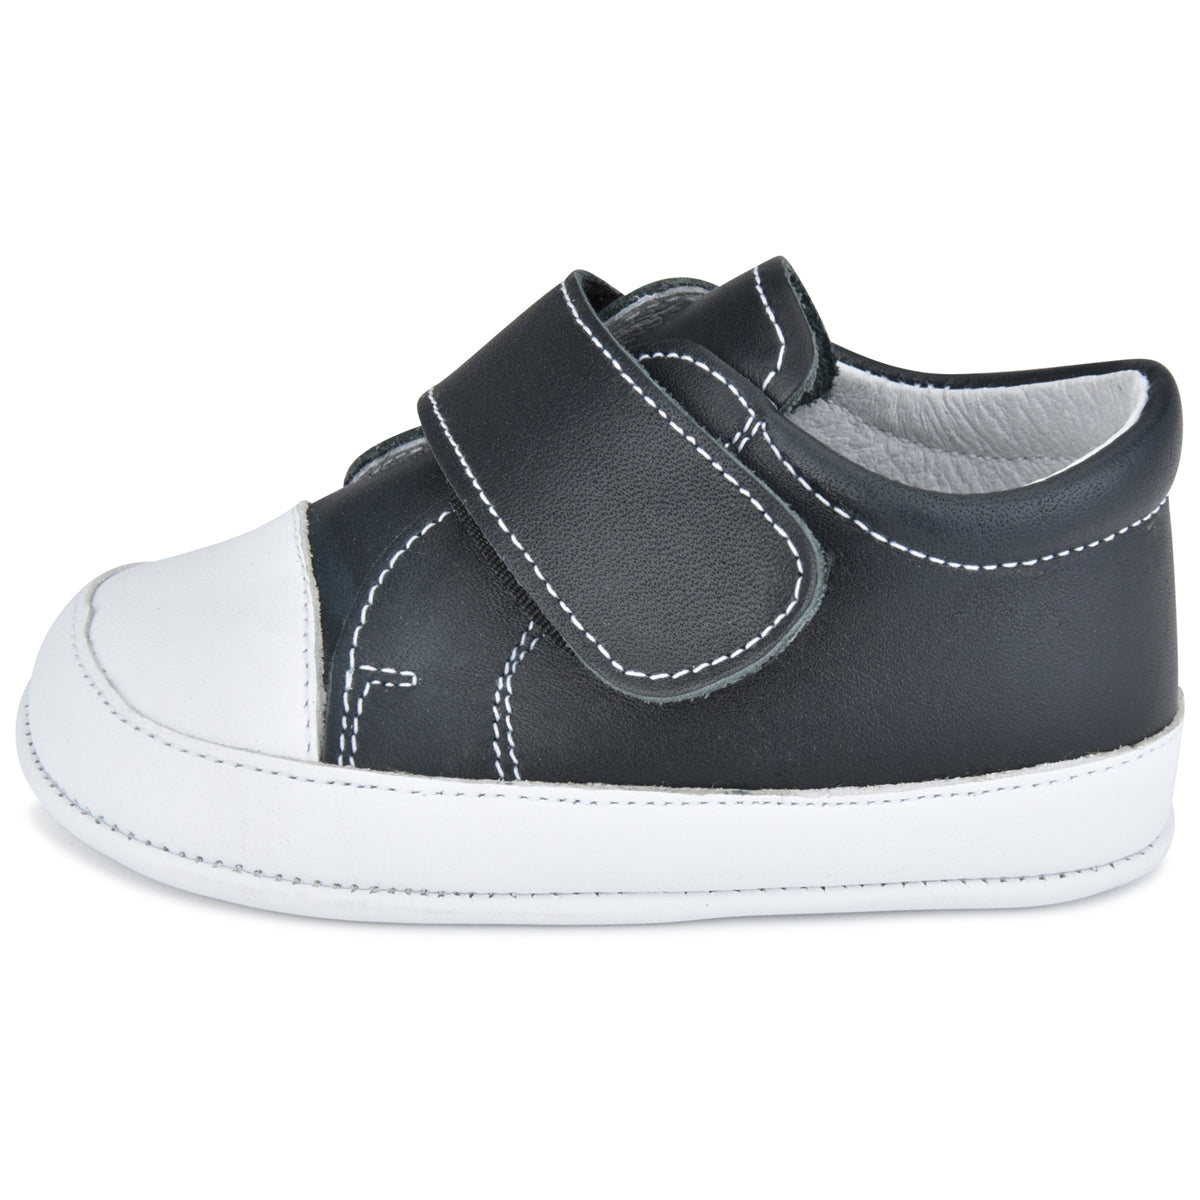 Made in Spain newborn leather shoe - Babyshoe.com